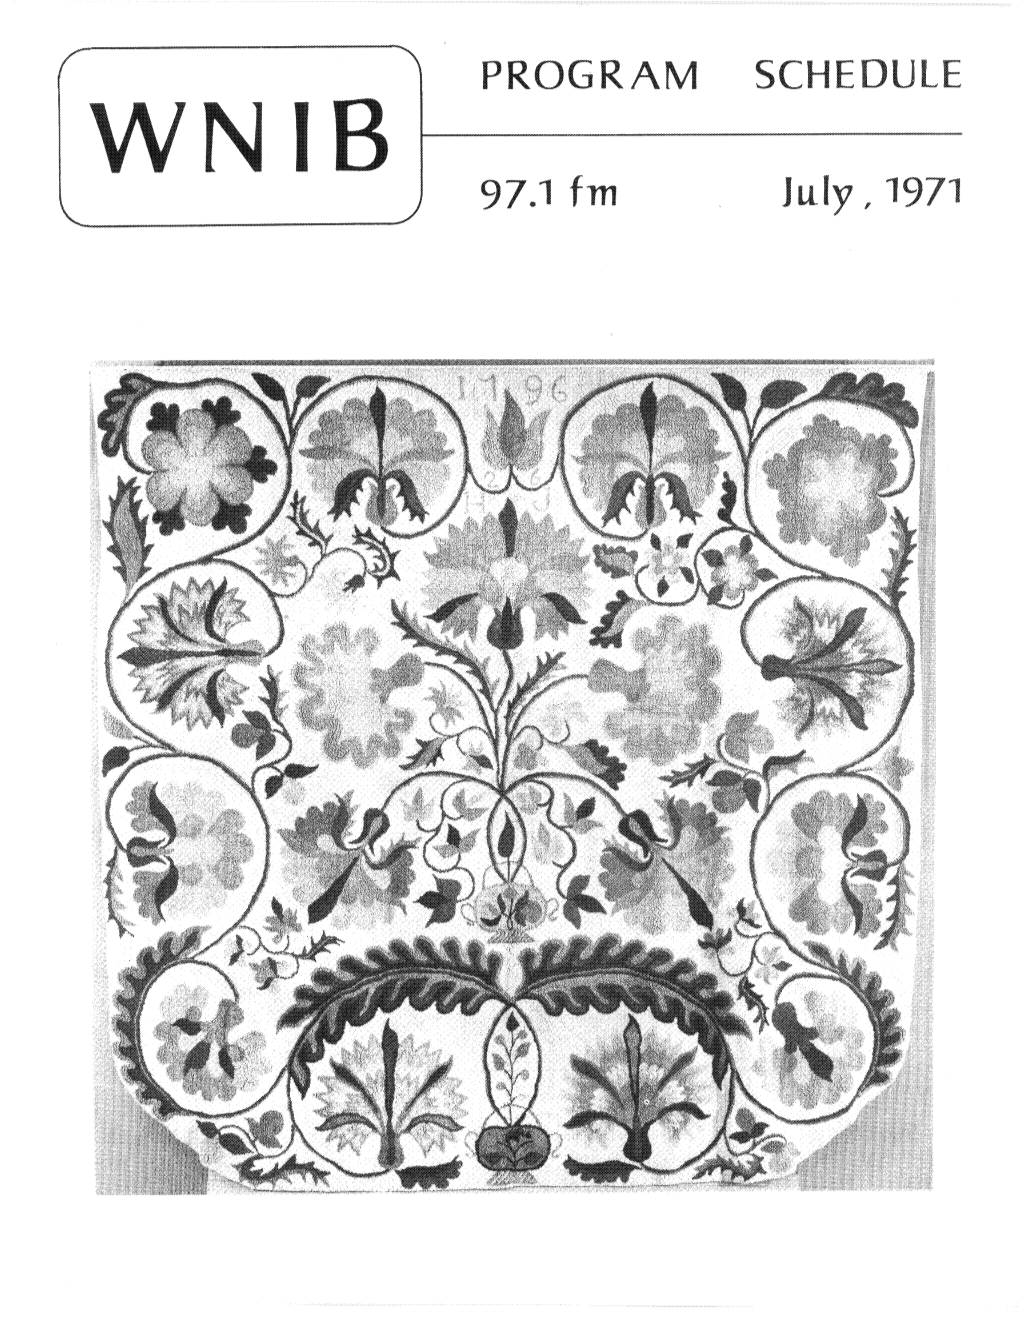 WNIB Program Schedule July 1971